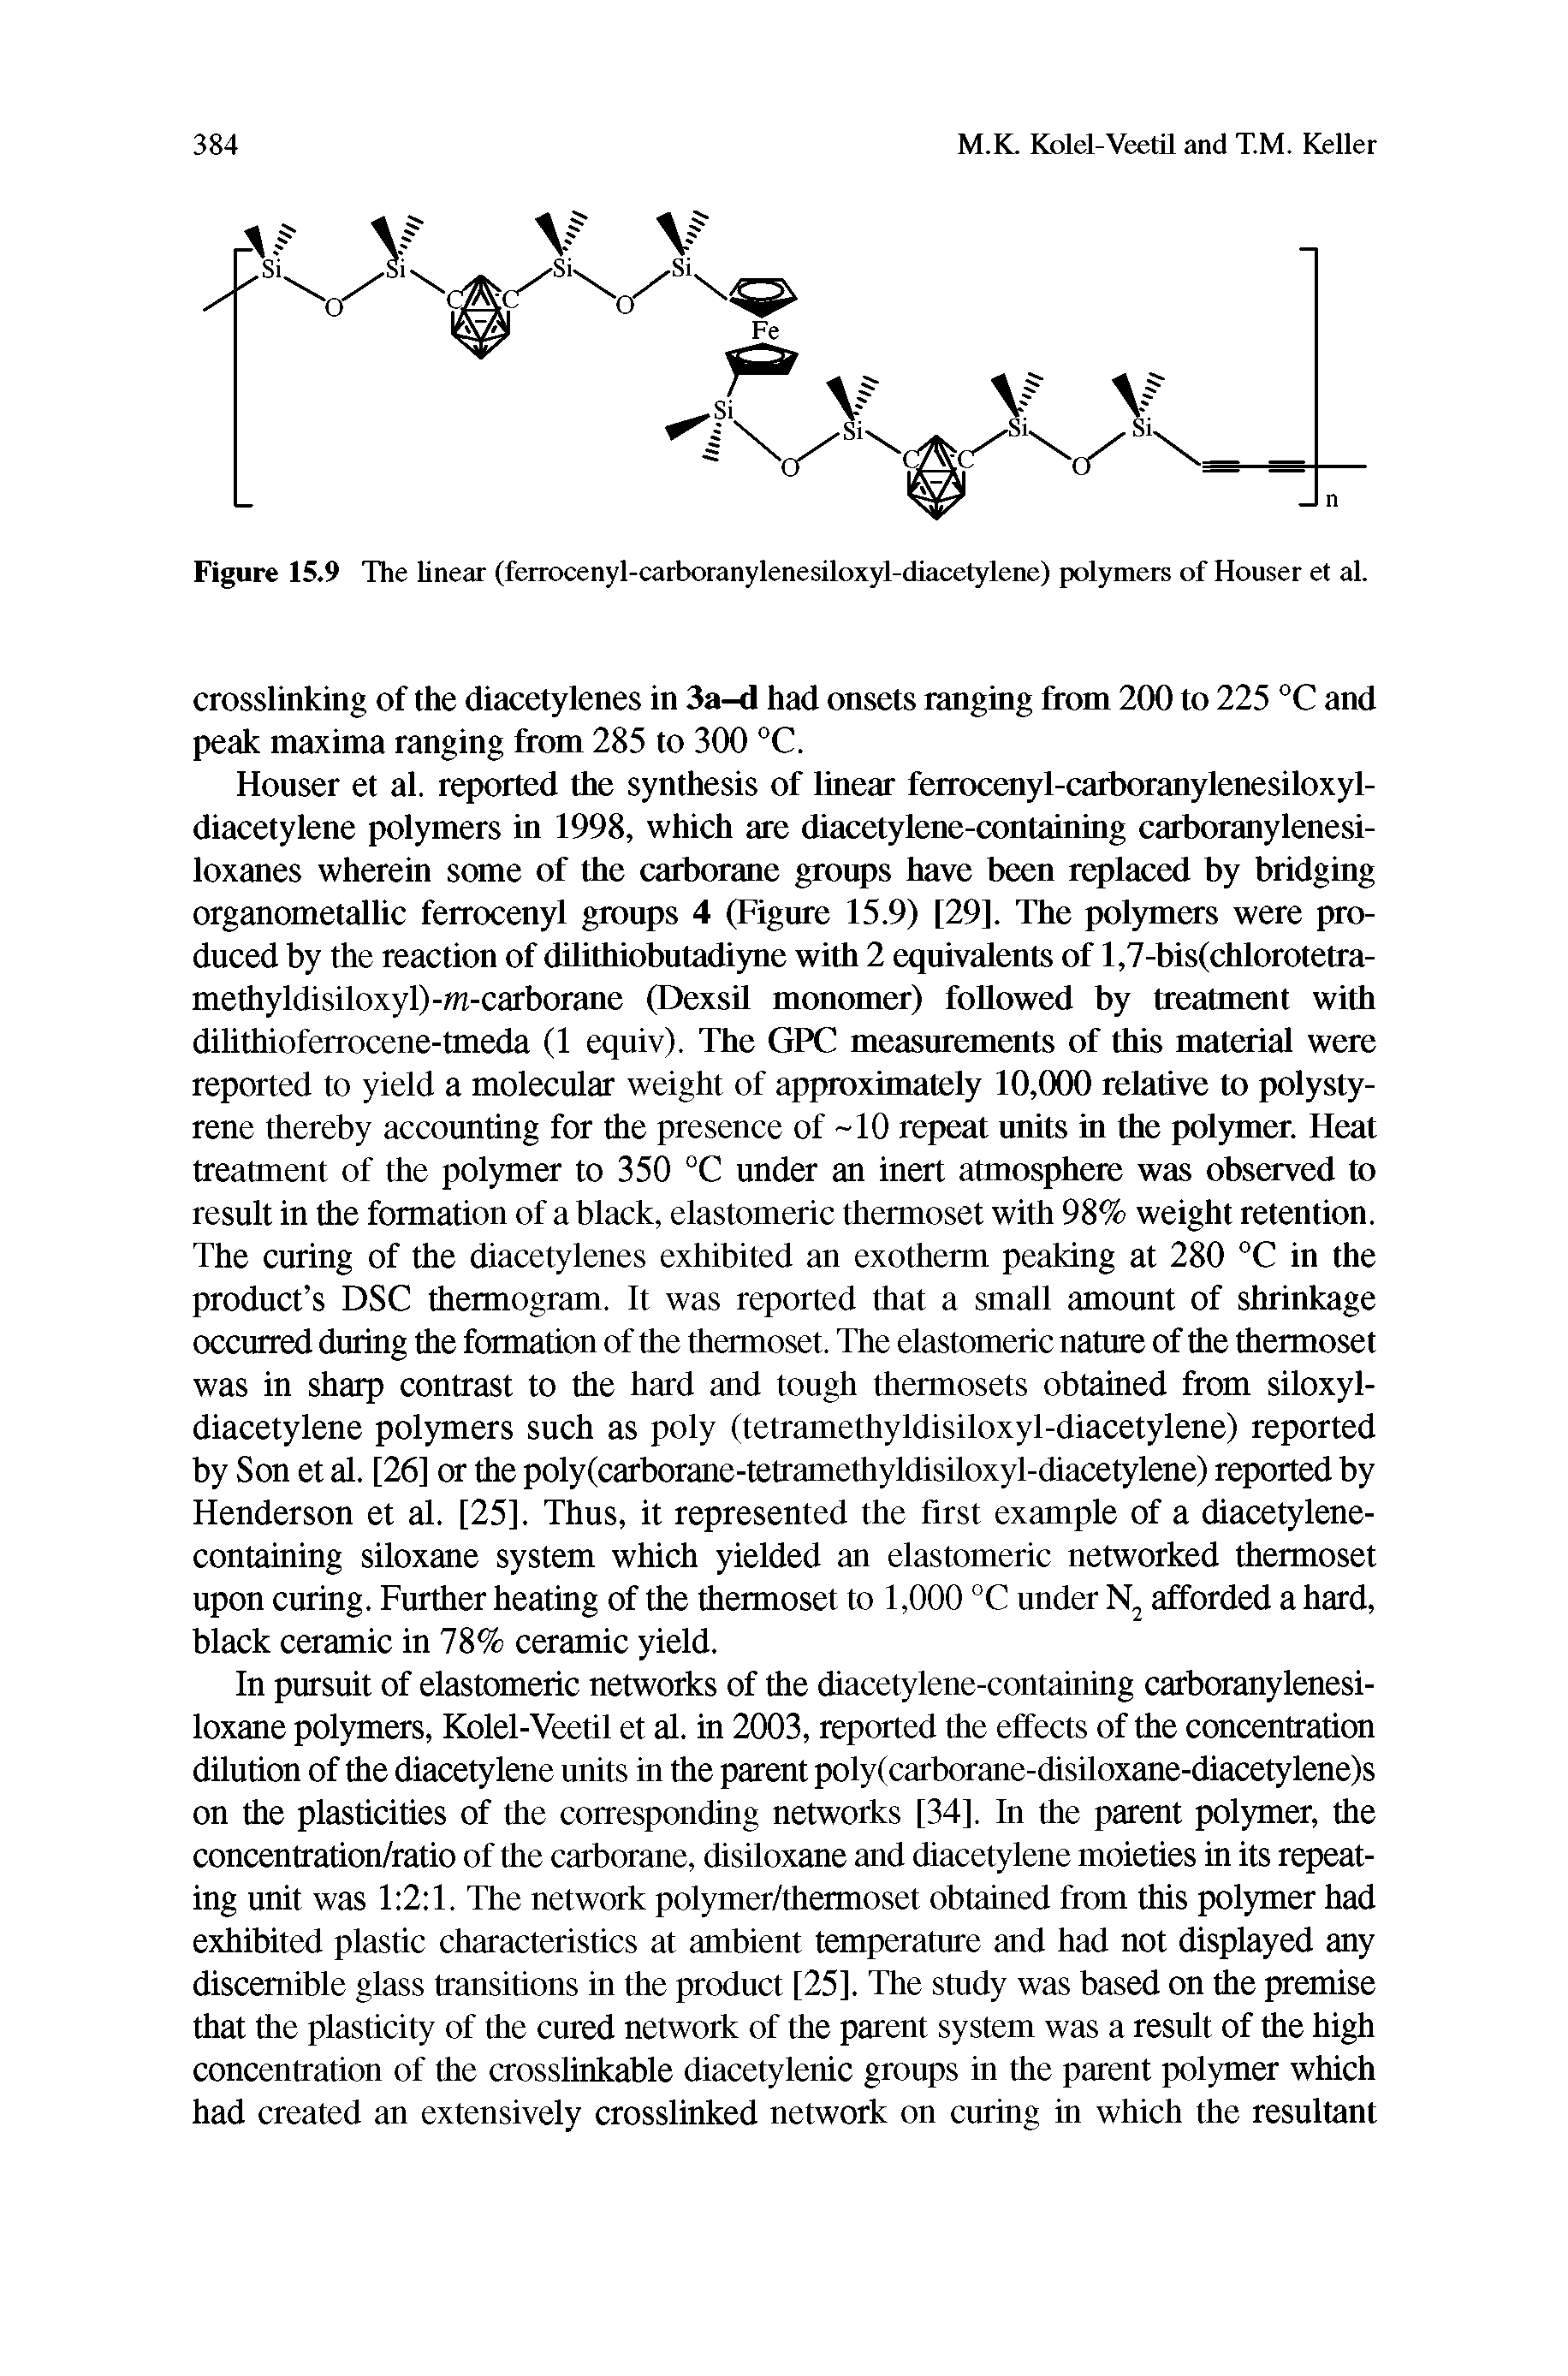 Figure 15.9 The linear (ferrocenyl-carboranylenesiloxyl-diacetylene) polymers of Houser et eil.